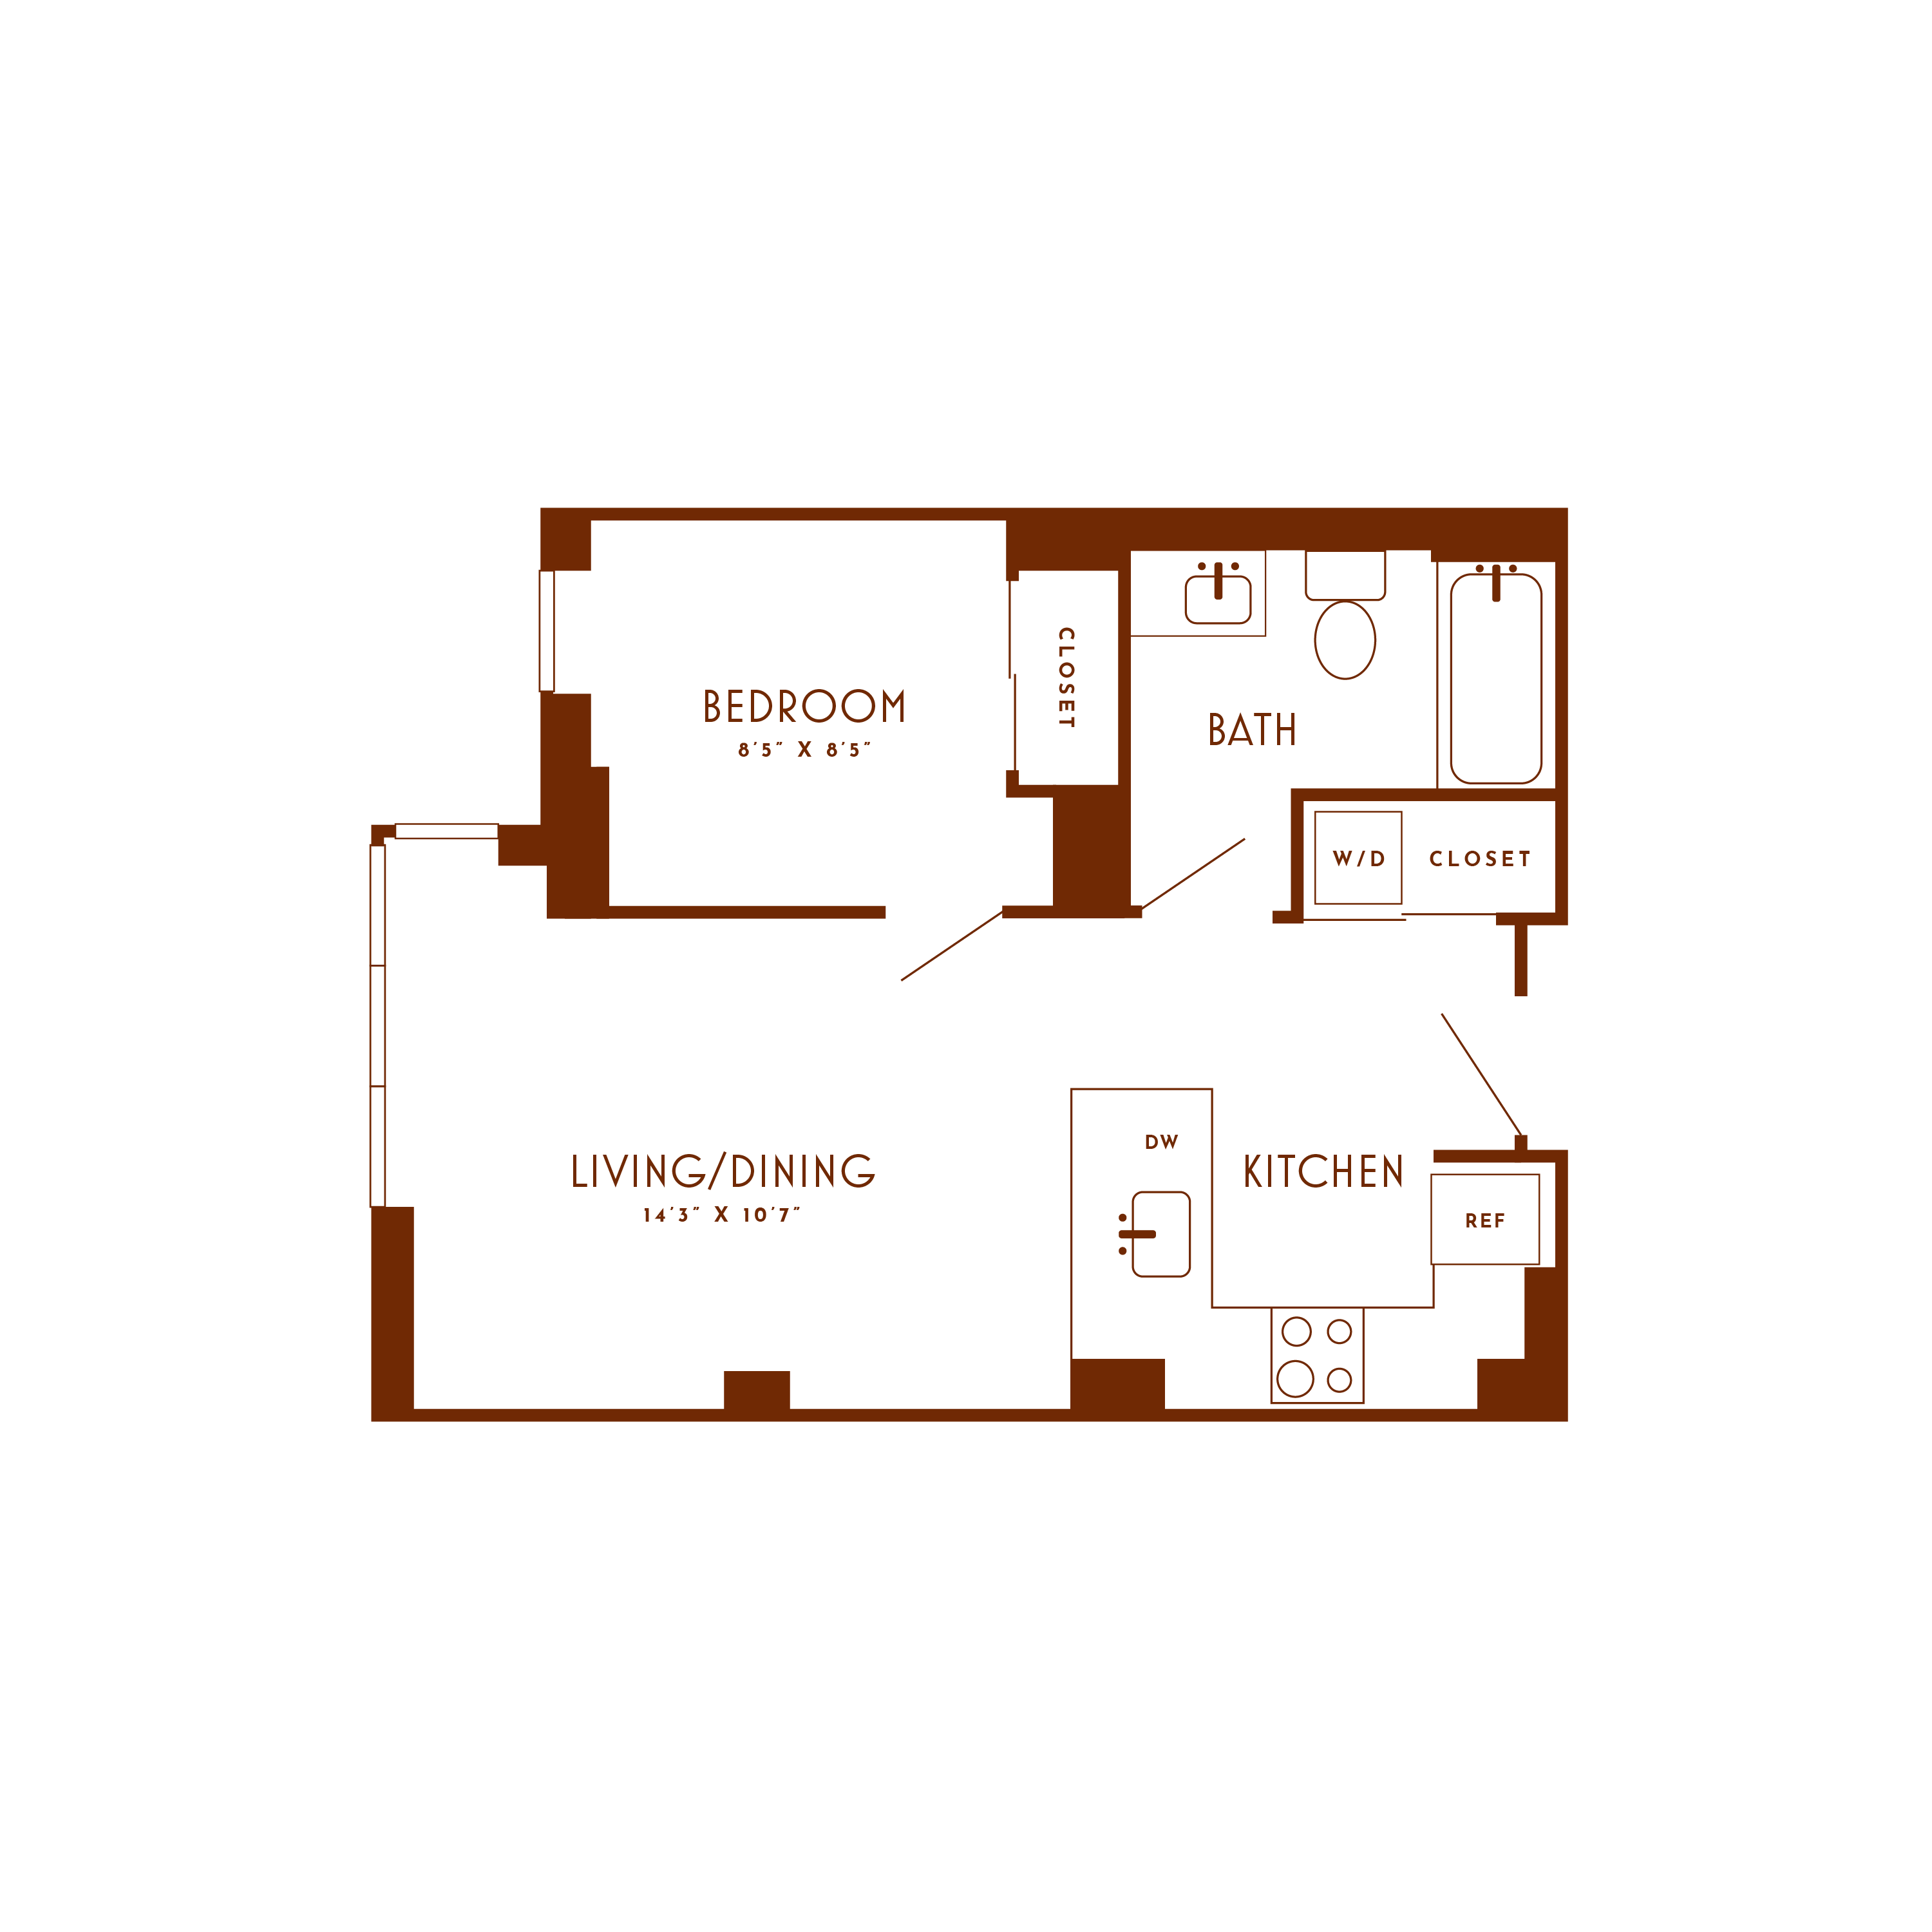 Floor plan image of unit 602